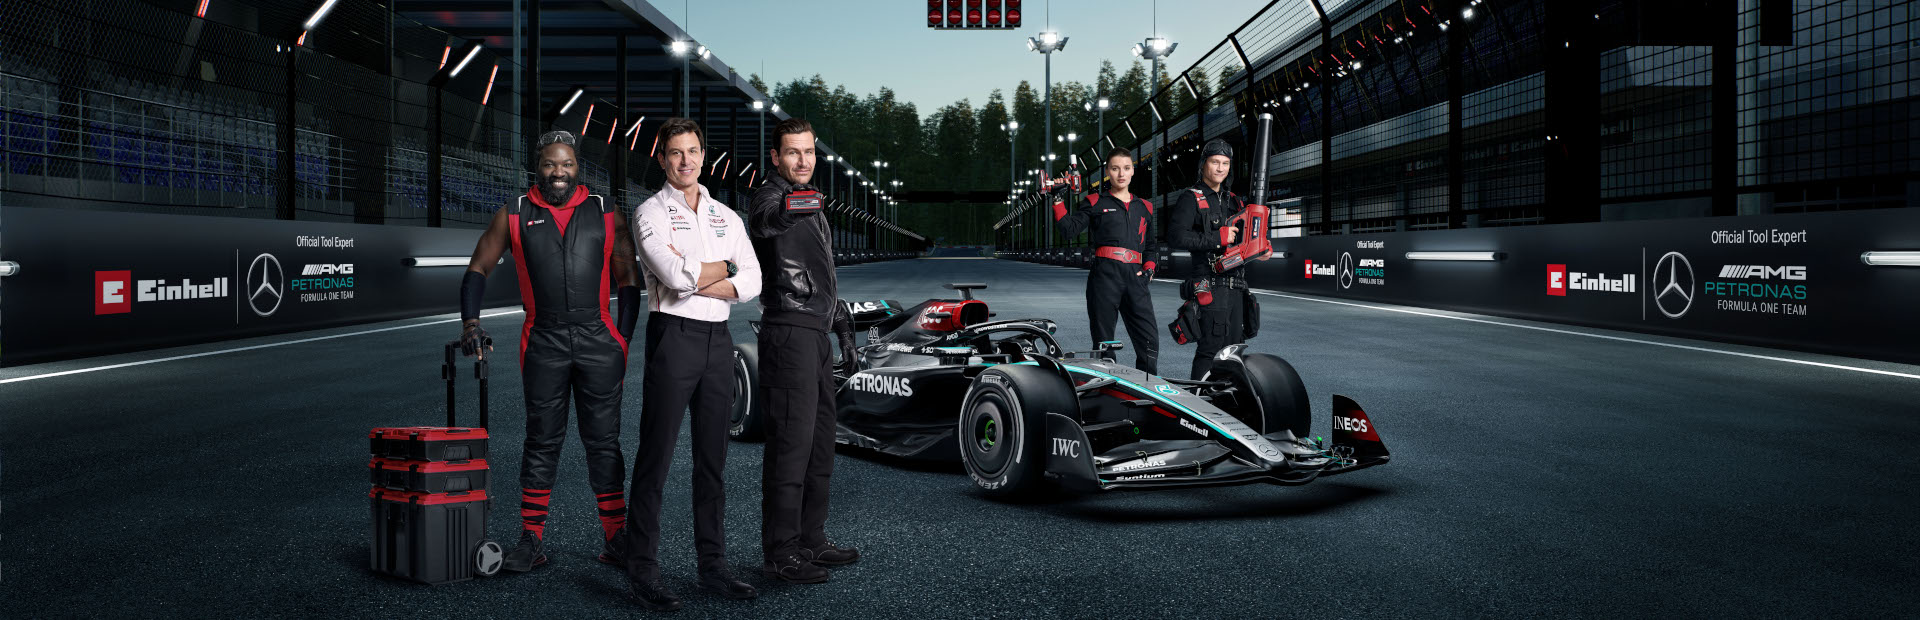 The E-Team with Mercedes AMG Petronas F1 Team